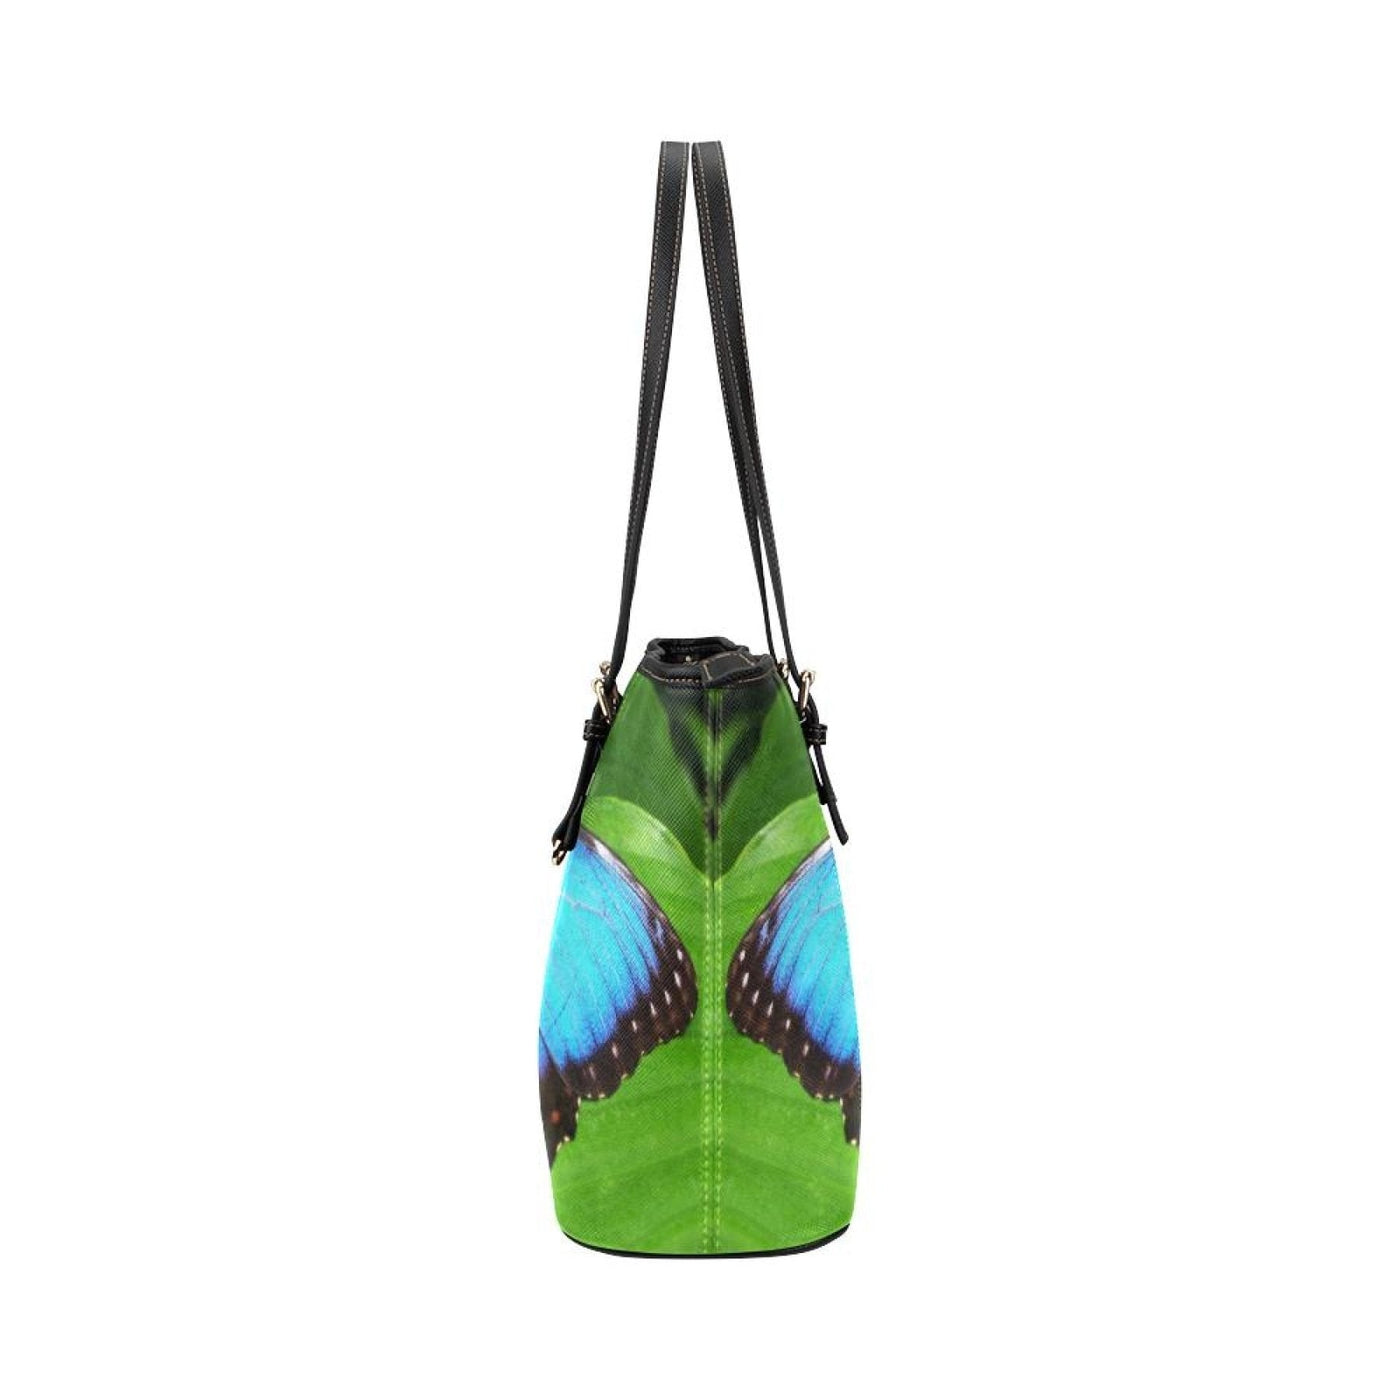 Large Leather Tote Shoulder Bag - Vibrant Blue Butterfly Illustration - Bags